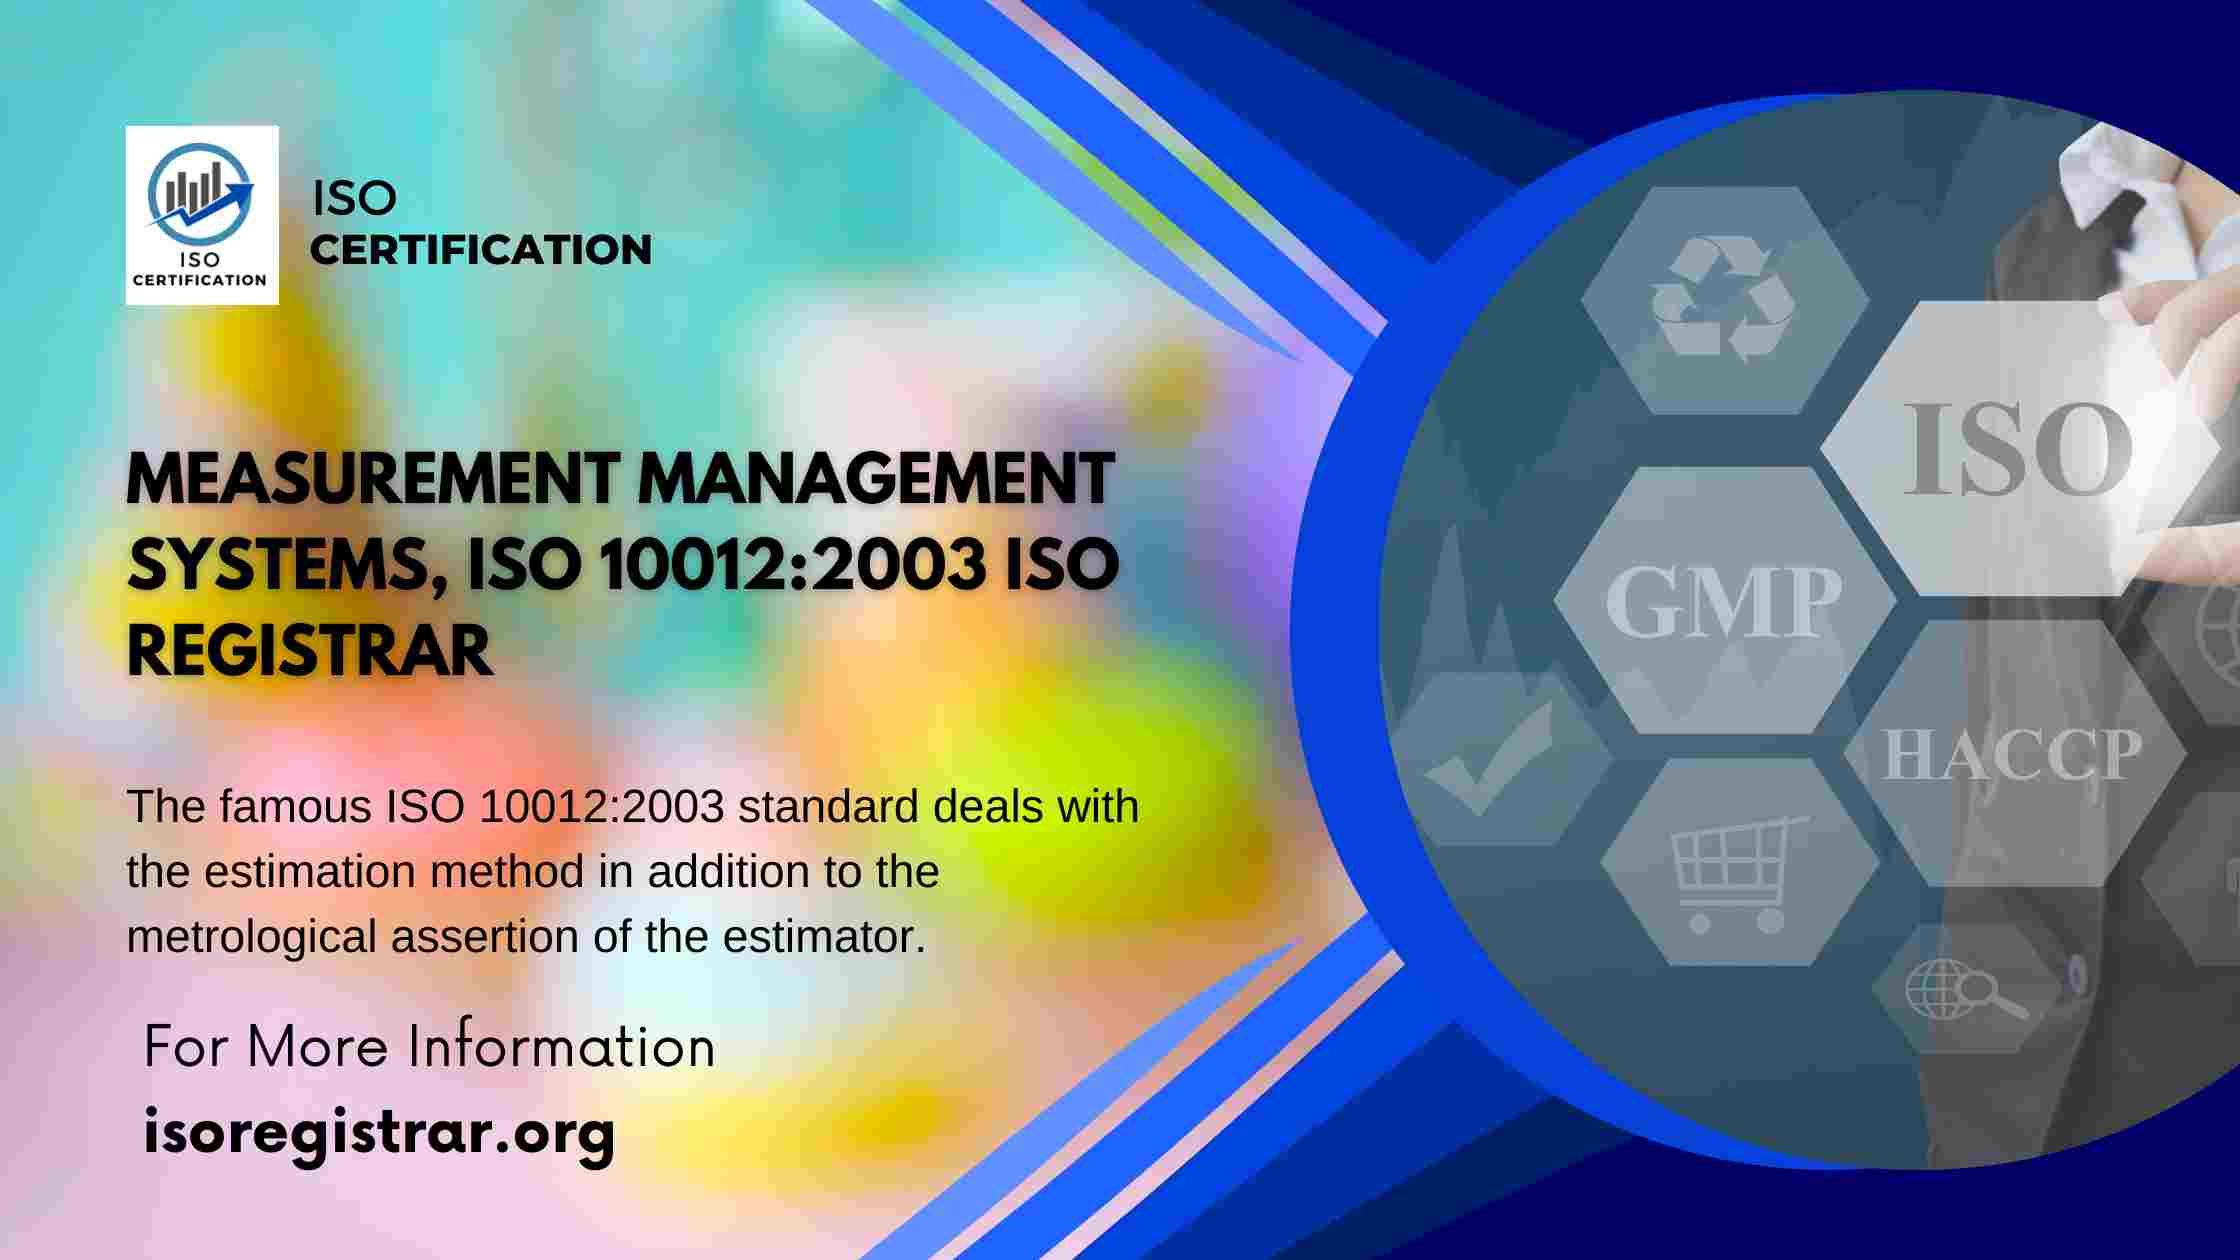 Measurement Management Systems, ISO 10012:2003 ISO Registrar